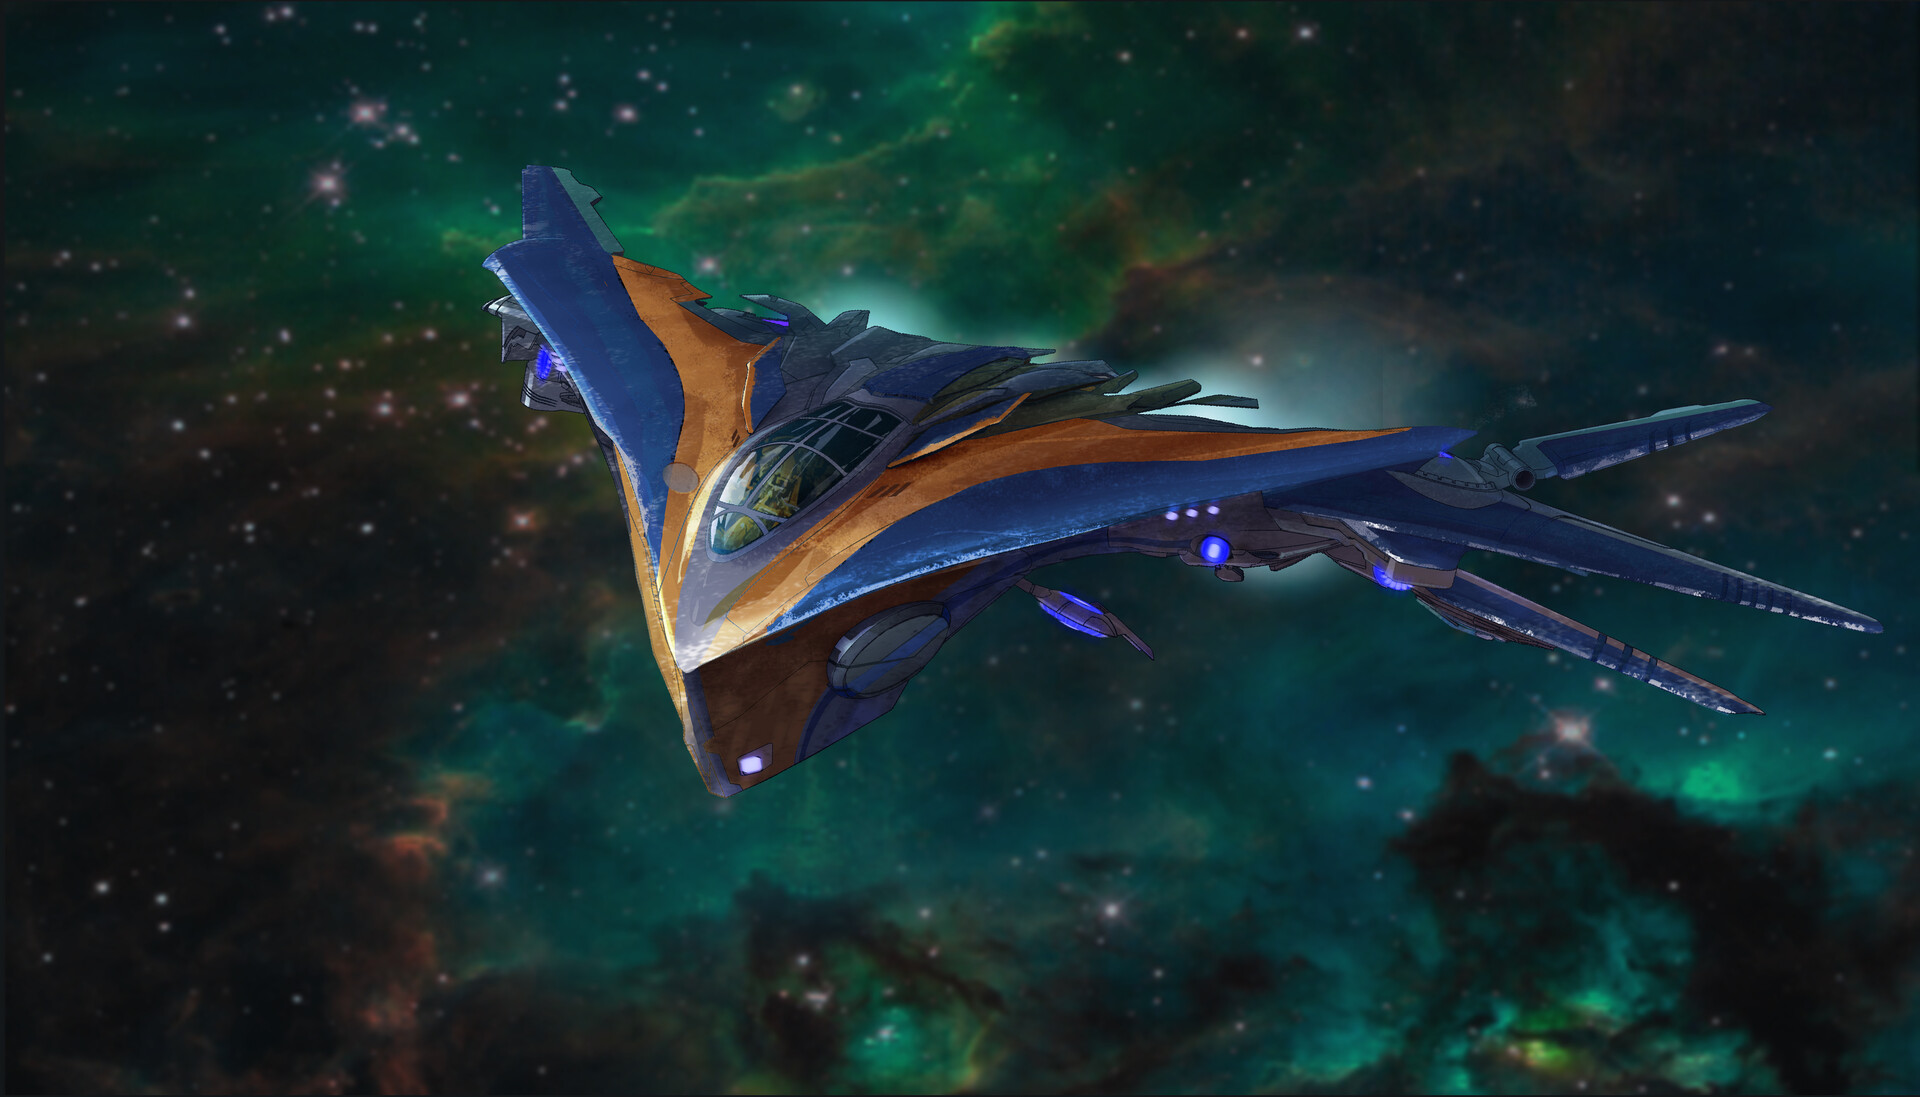 John Calmette - Guardians of the Galaxy 2-D spaceship renders